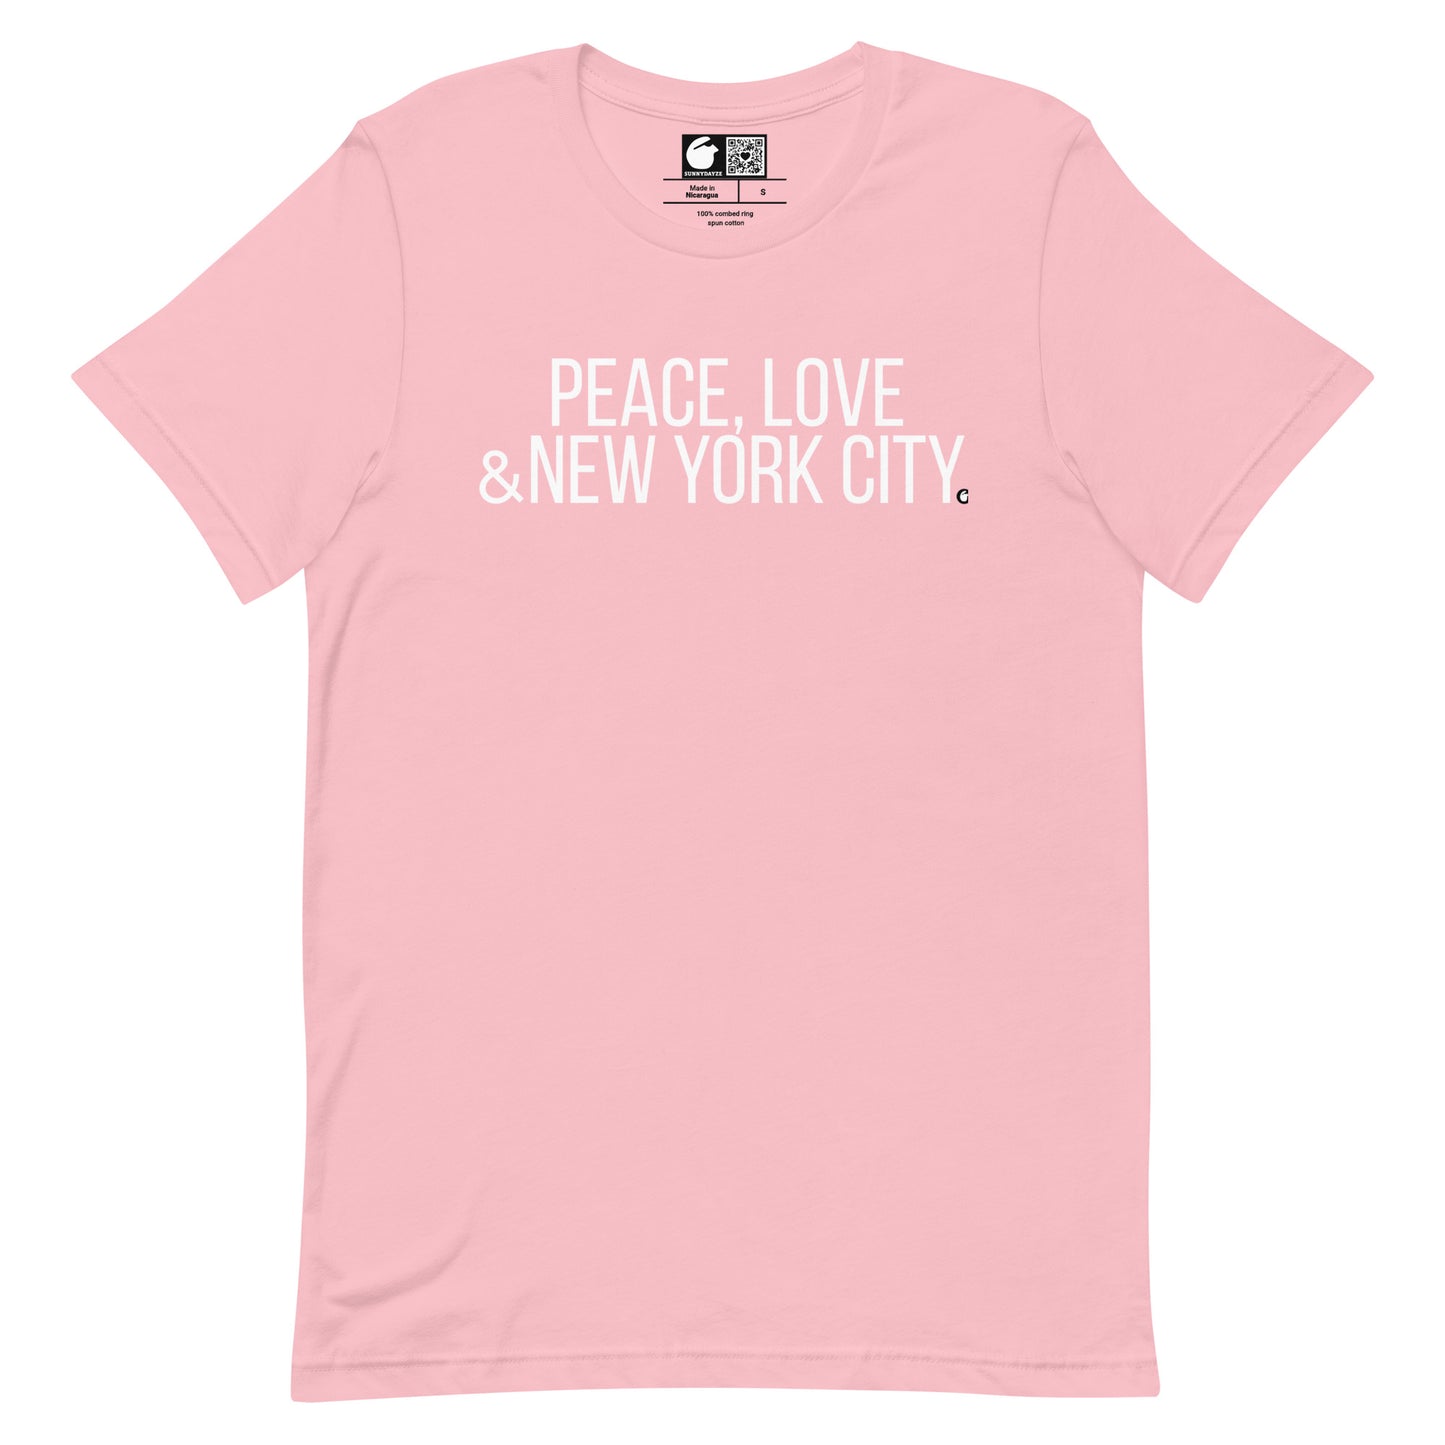 NEW YORK CITY Short-Sleeve unisex t-shirt